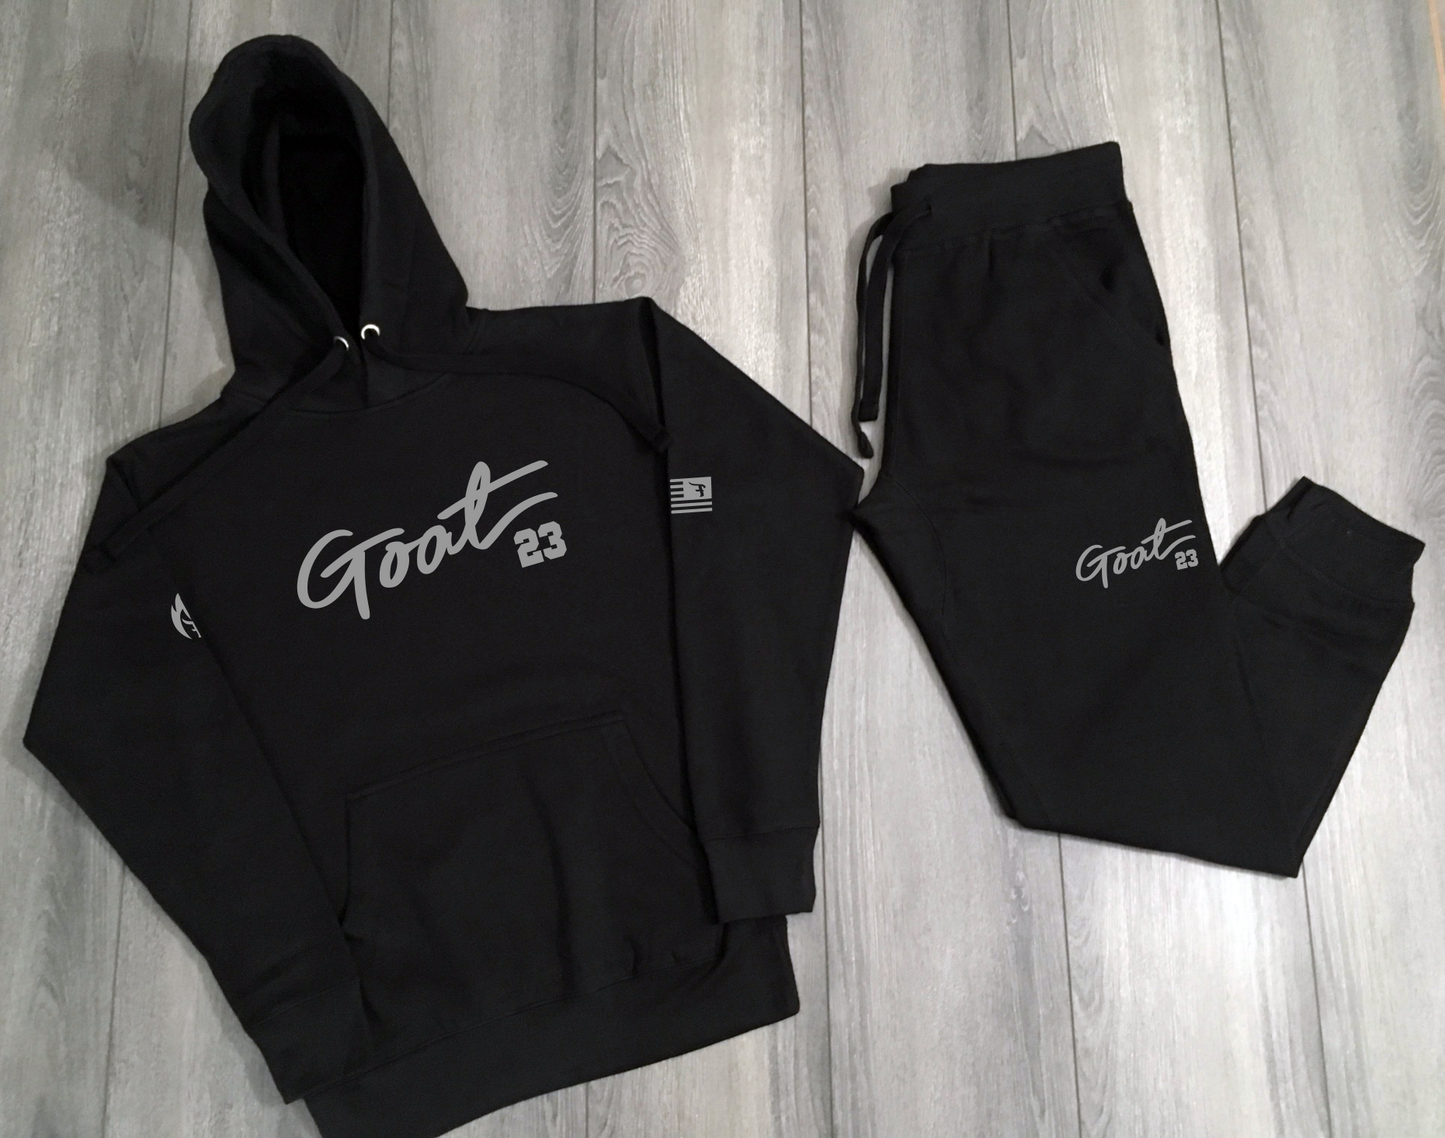 Men's Graphic Sneaker Sweatsuit To Match Air Jordan 11 Retro Cool Grey Black GOAT 23 Hoodie Joggers Set